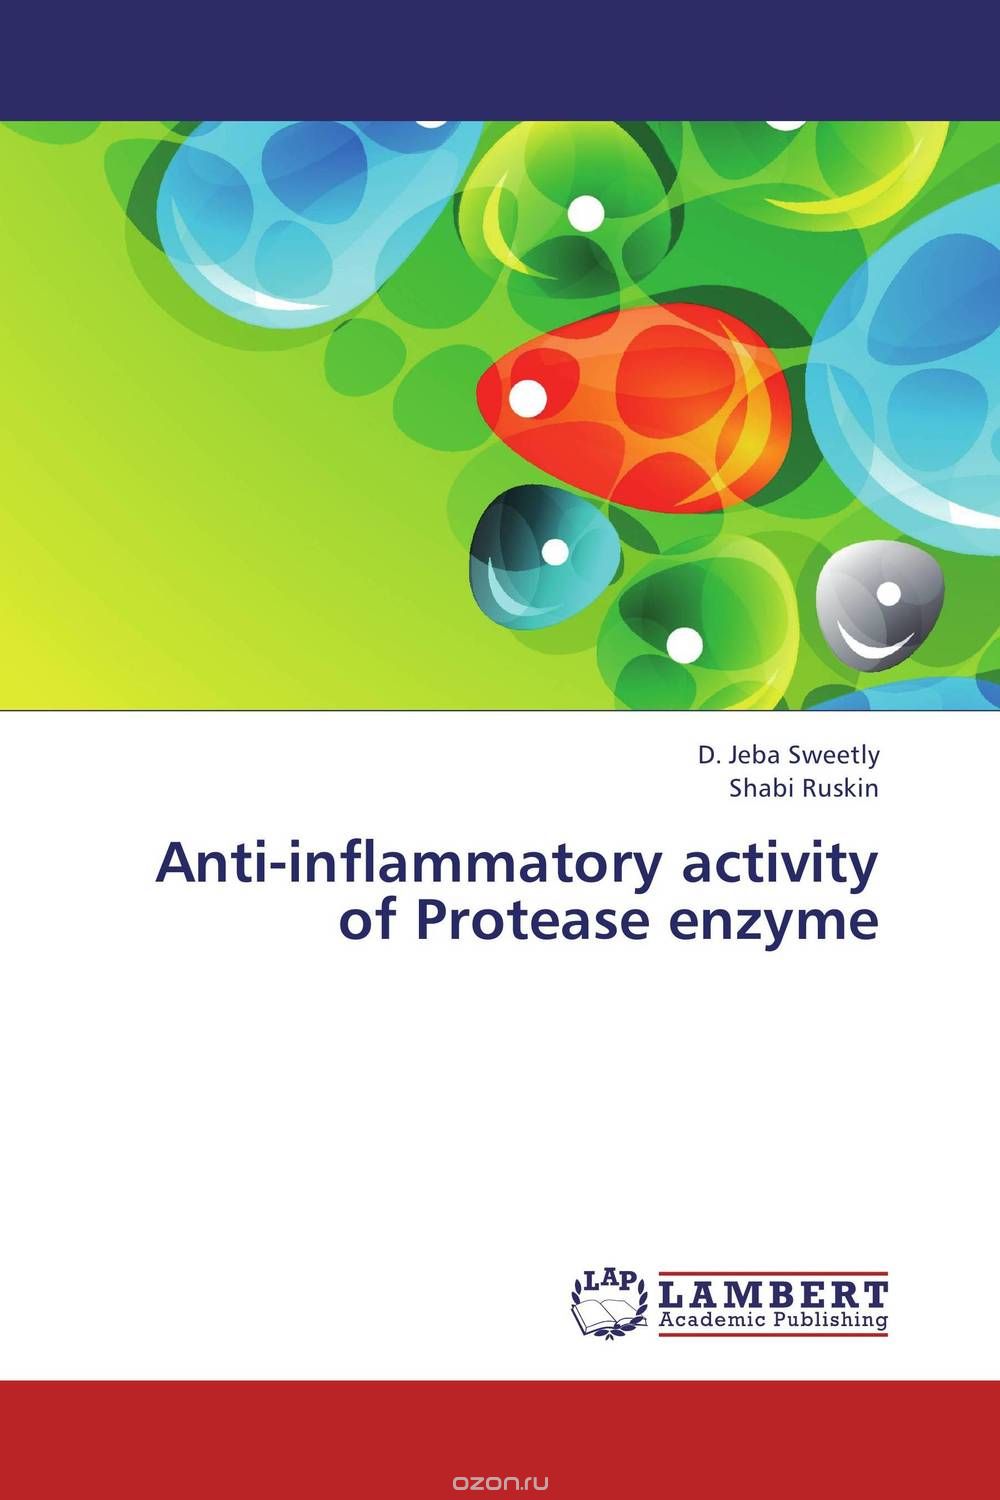 Скачать книгу "Anti-inflammatory activity of Protease enzyme"